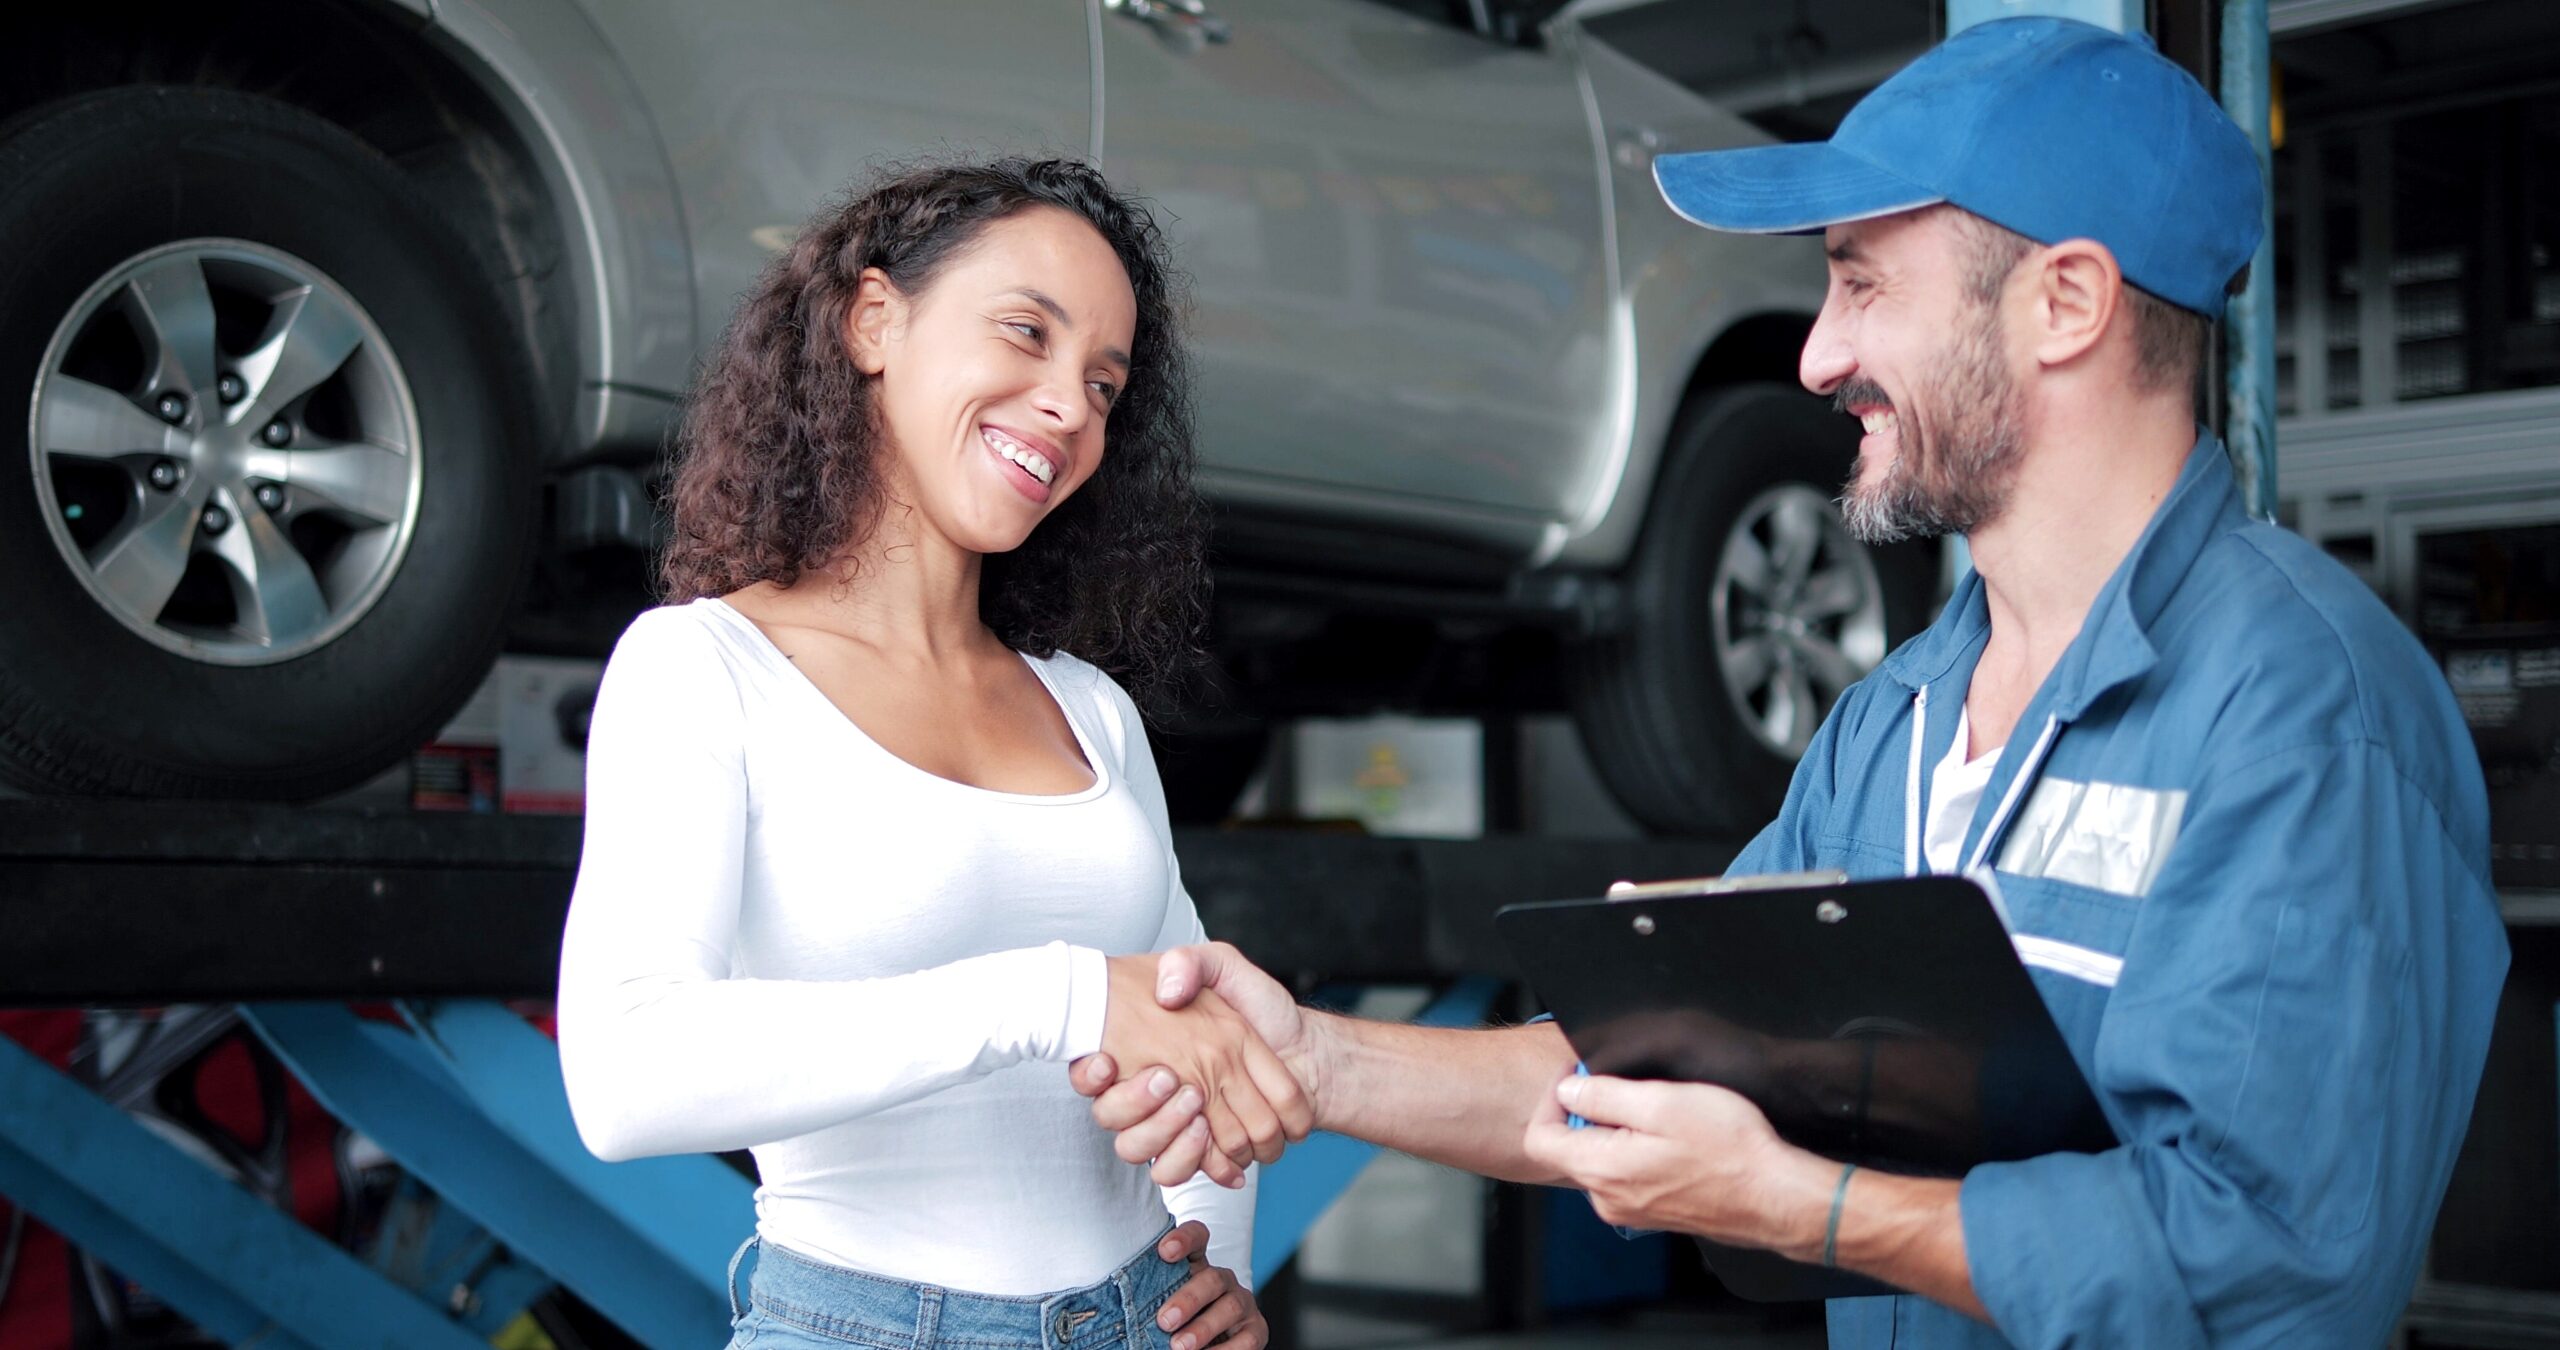 6 Ways to Improve Customer Service in Auto Repair